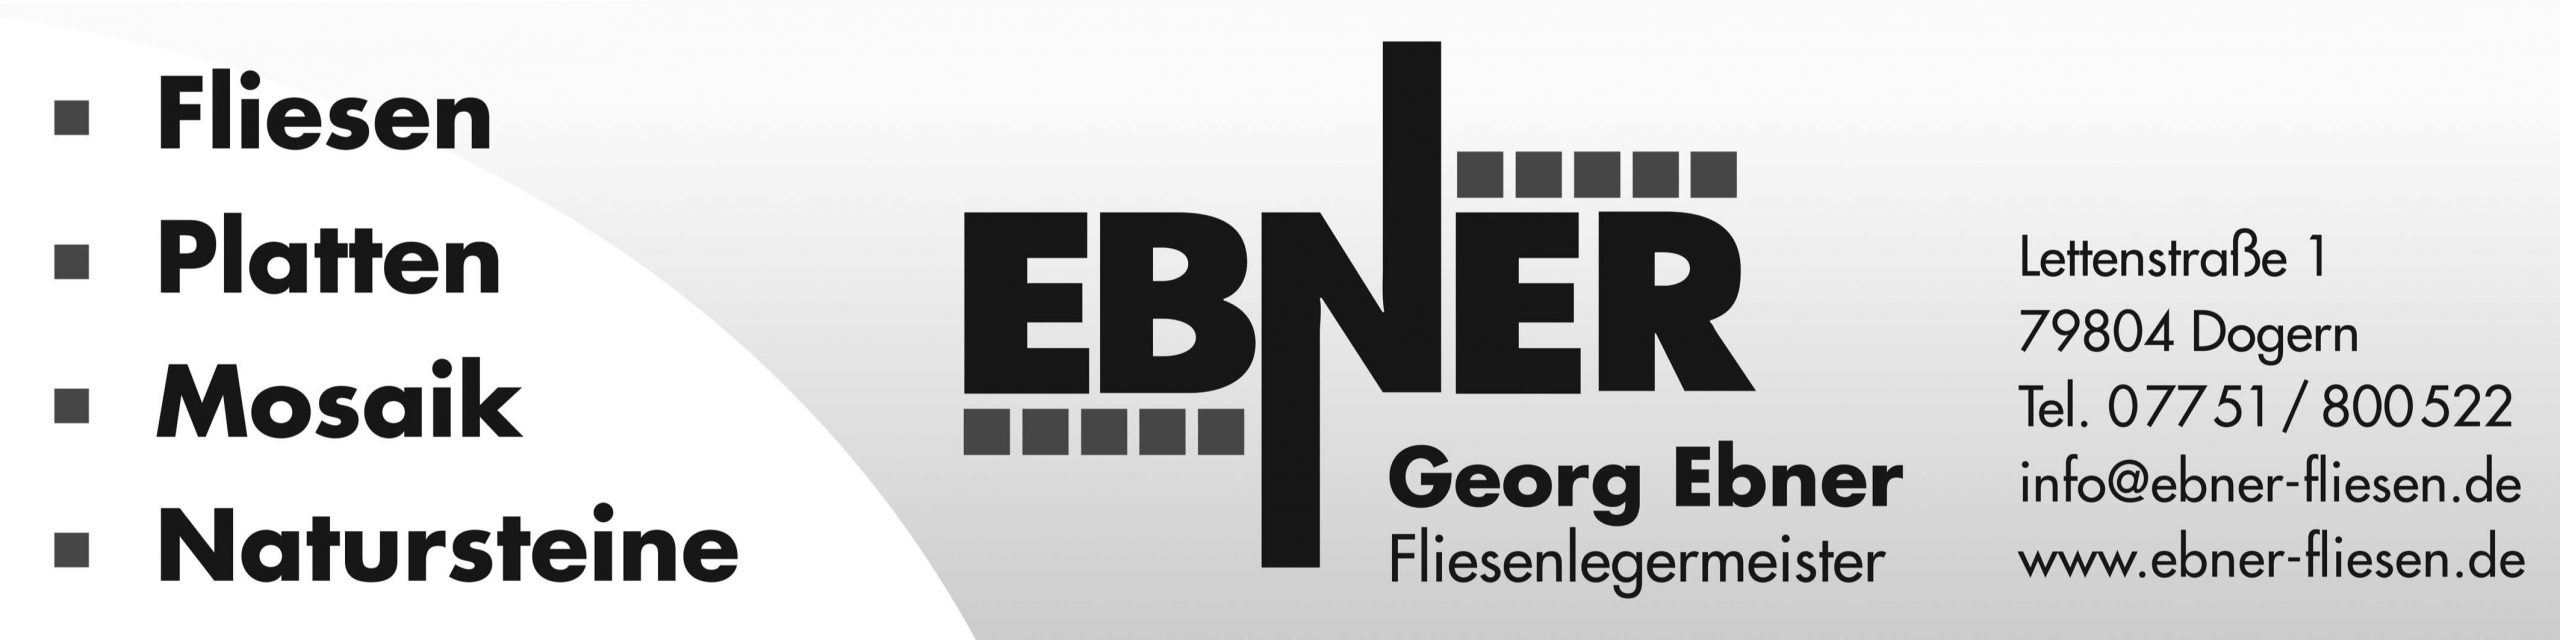 Ebner-Georg sw